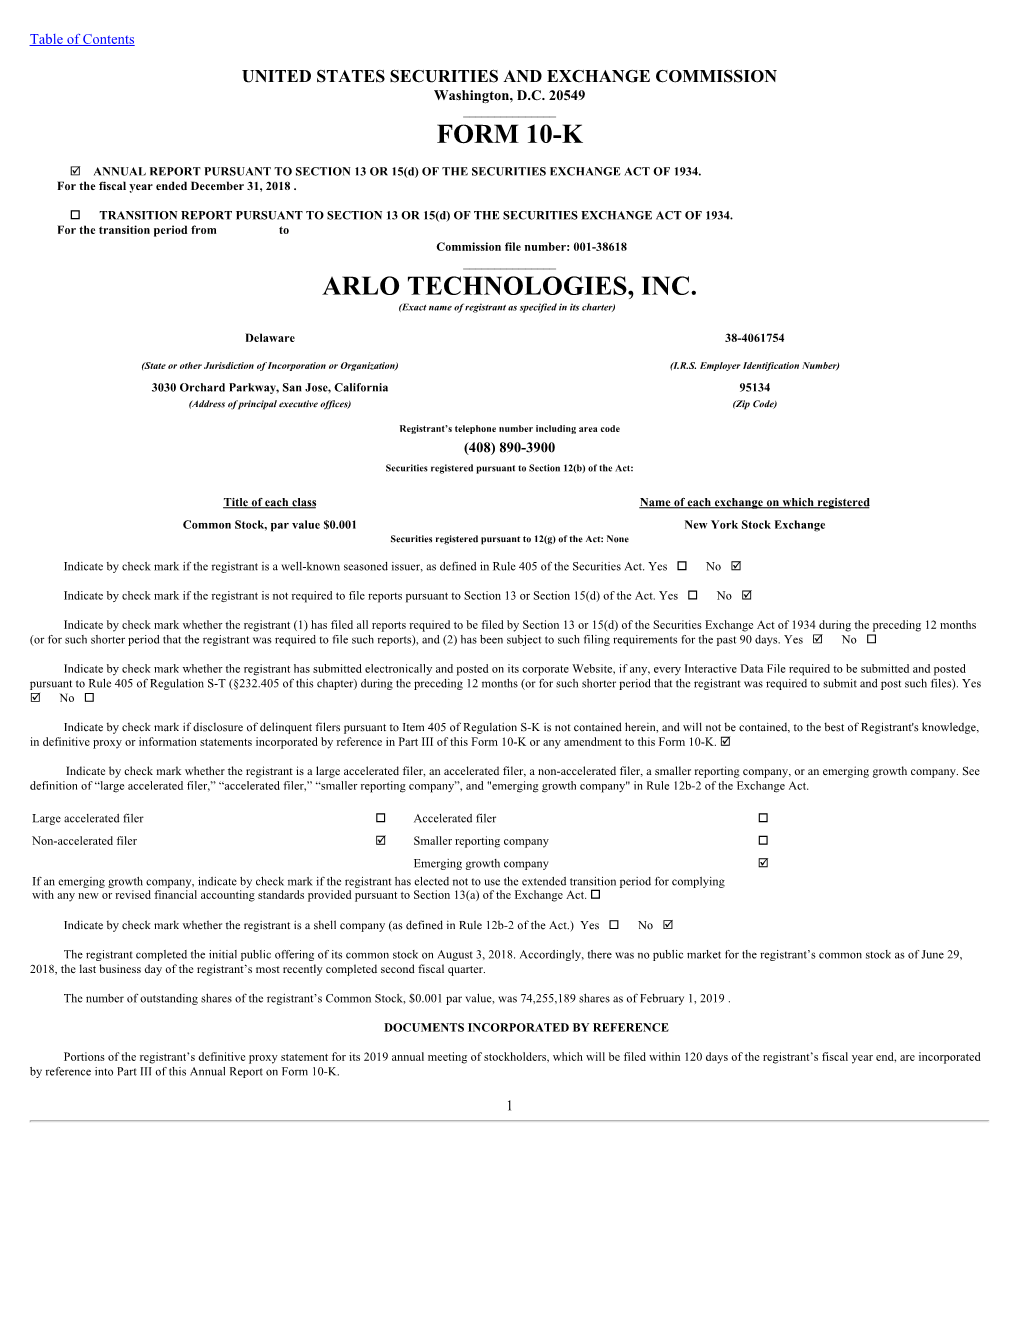 Form 10-K Arlo Technologies, Inc